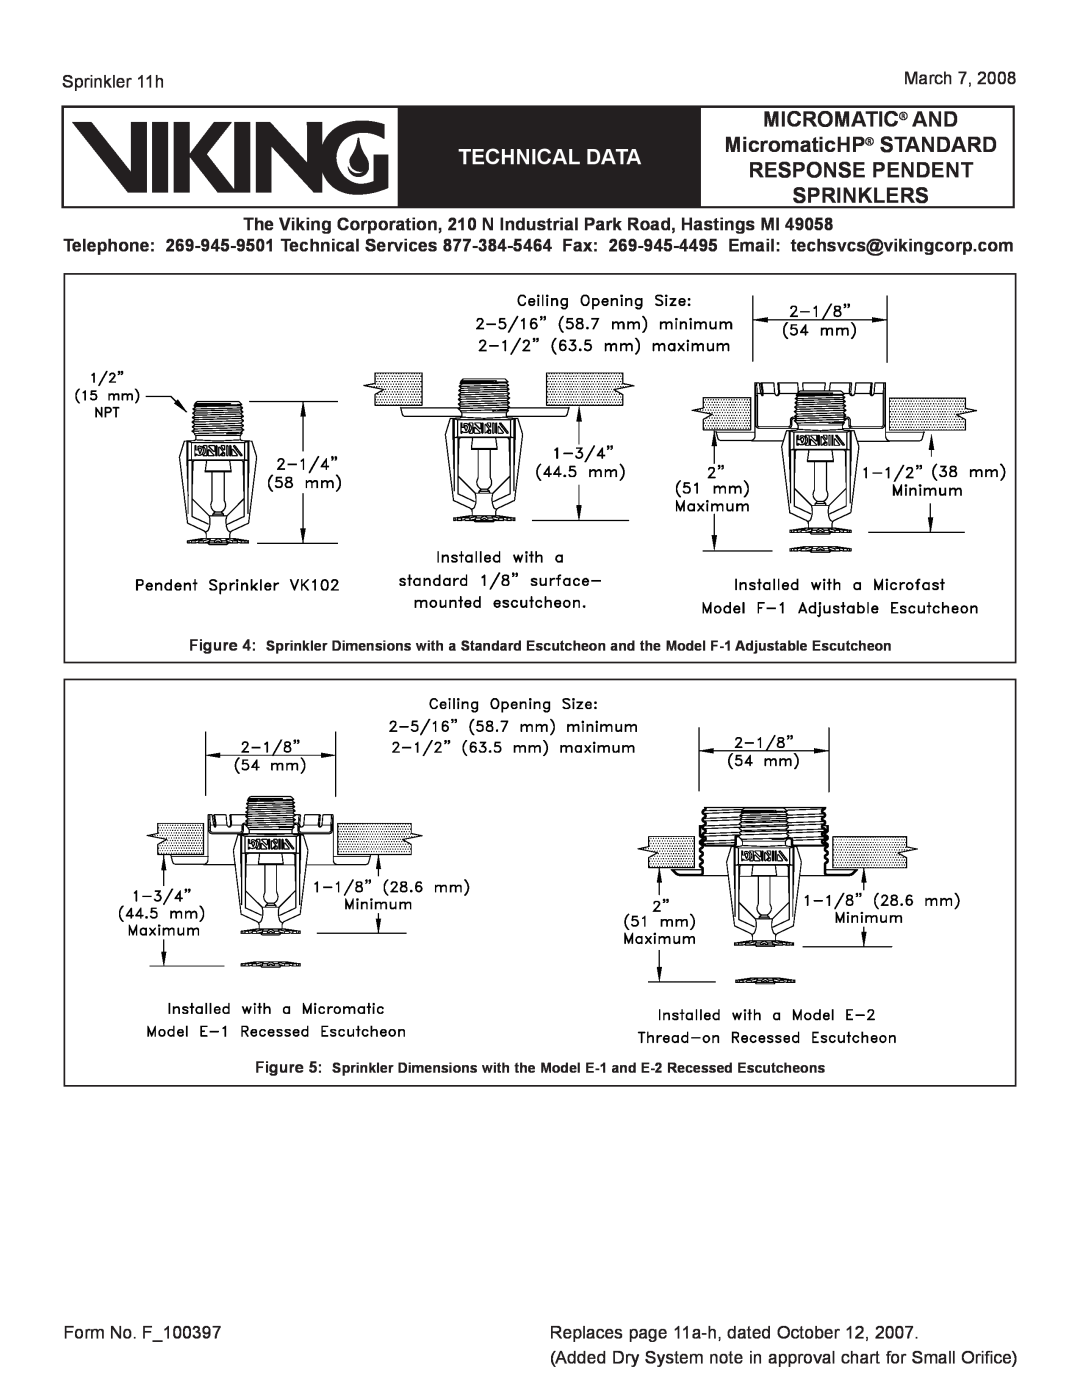 Viking Sprinkler 11a Sprinkler 11h, Replaces page 11a-h, dated October 12, Sprinklers, March, Form No. F100397 